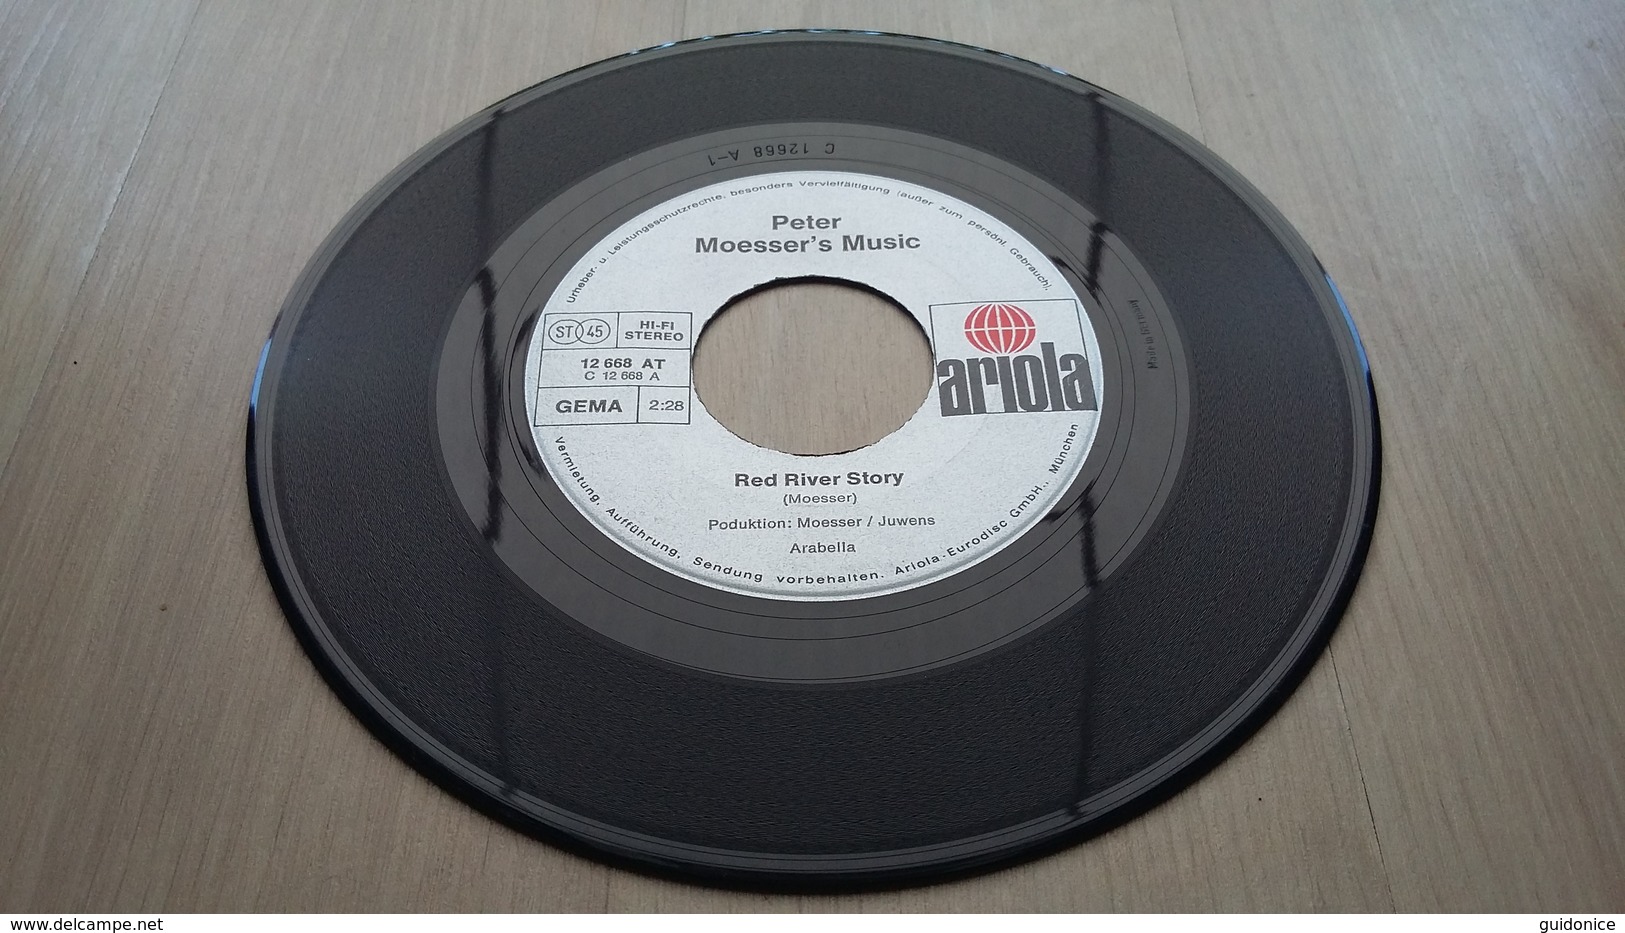 Peter Moesser's Music - Red River Story - Vinyl-Single - Disco, Pop